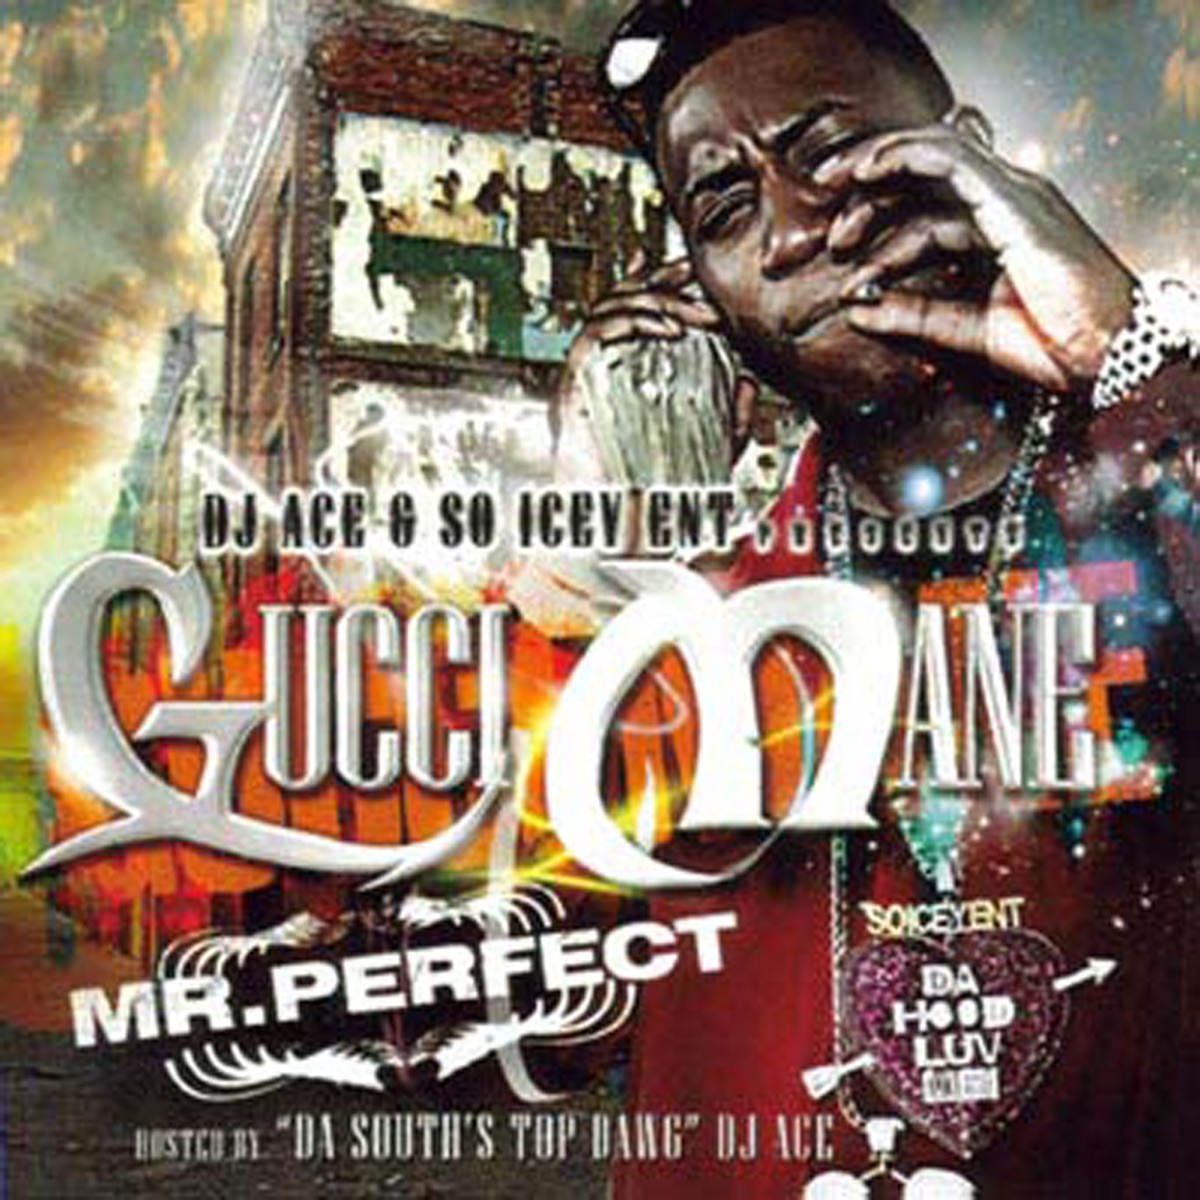 ‎Mr. Perfect - Album by Gucci Mane & DJ Ace - Apple Music